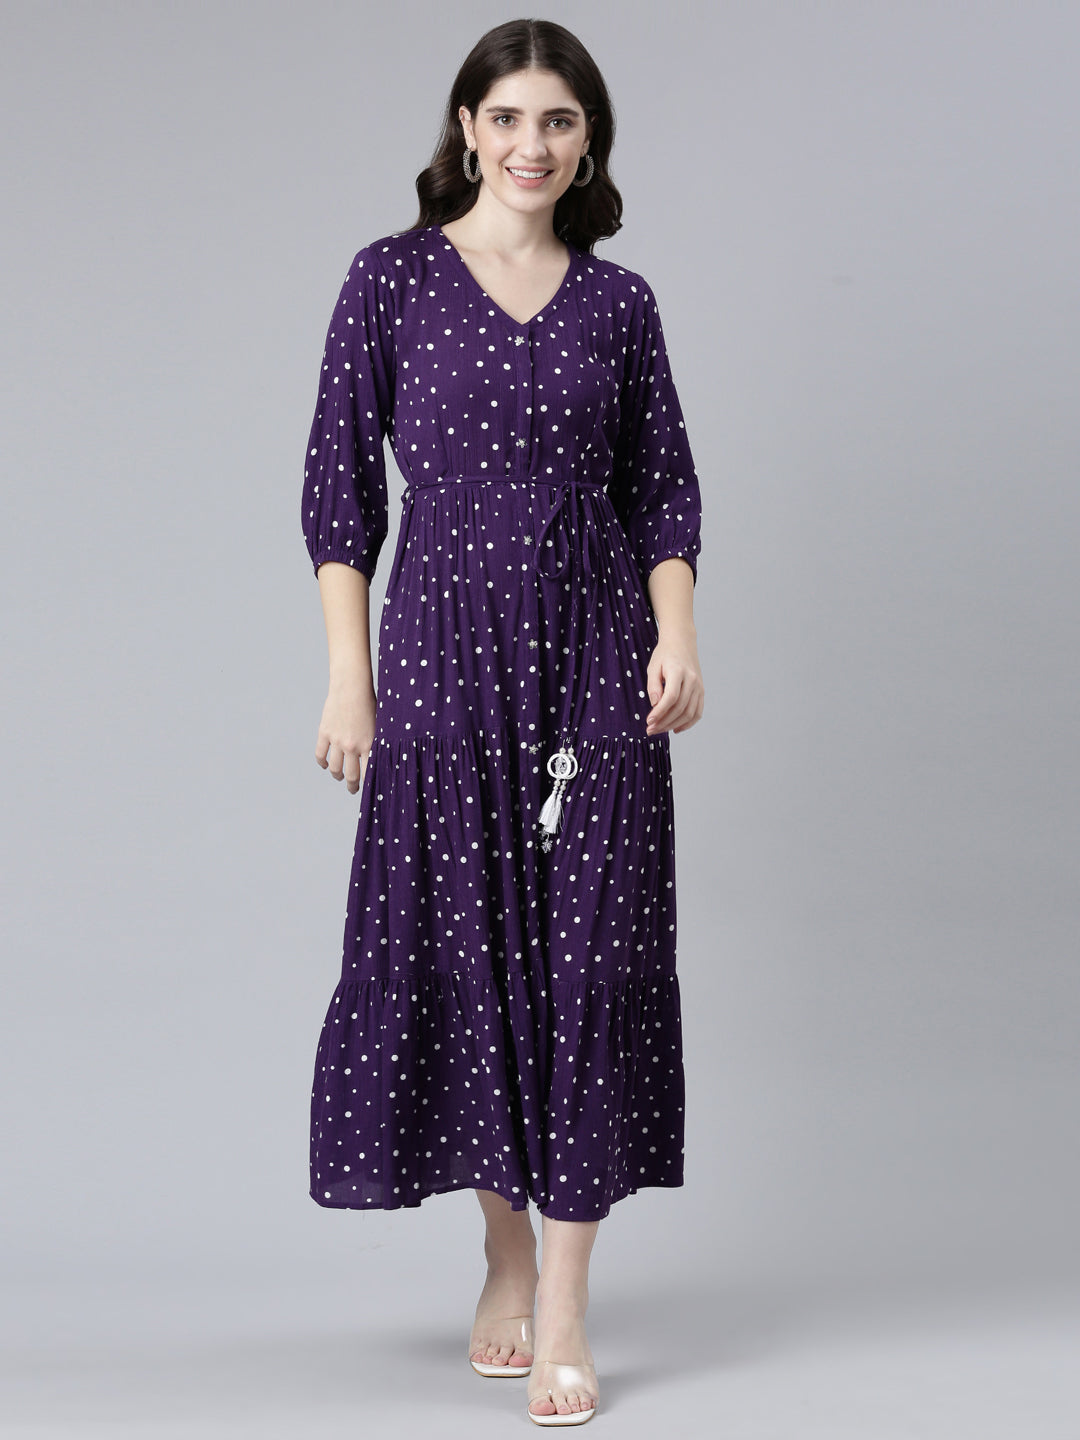 Neerus Purple Straight Casual Printed Gown